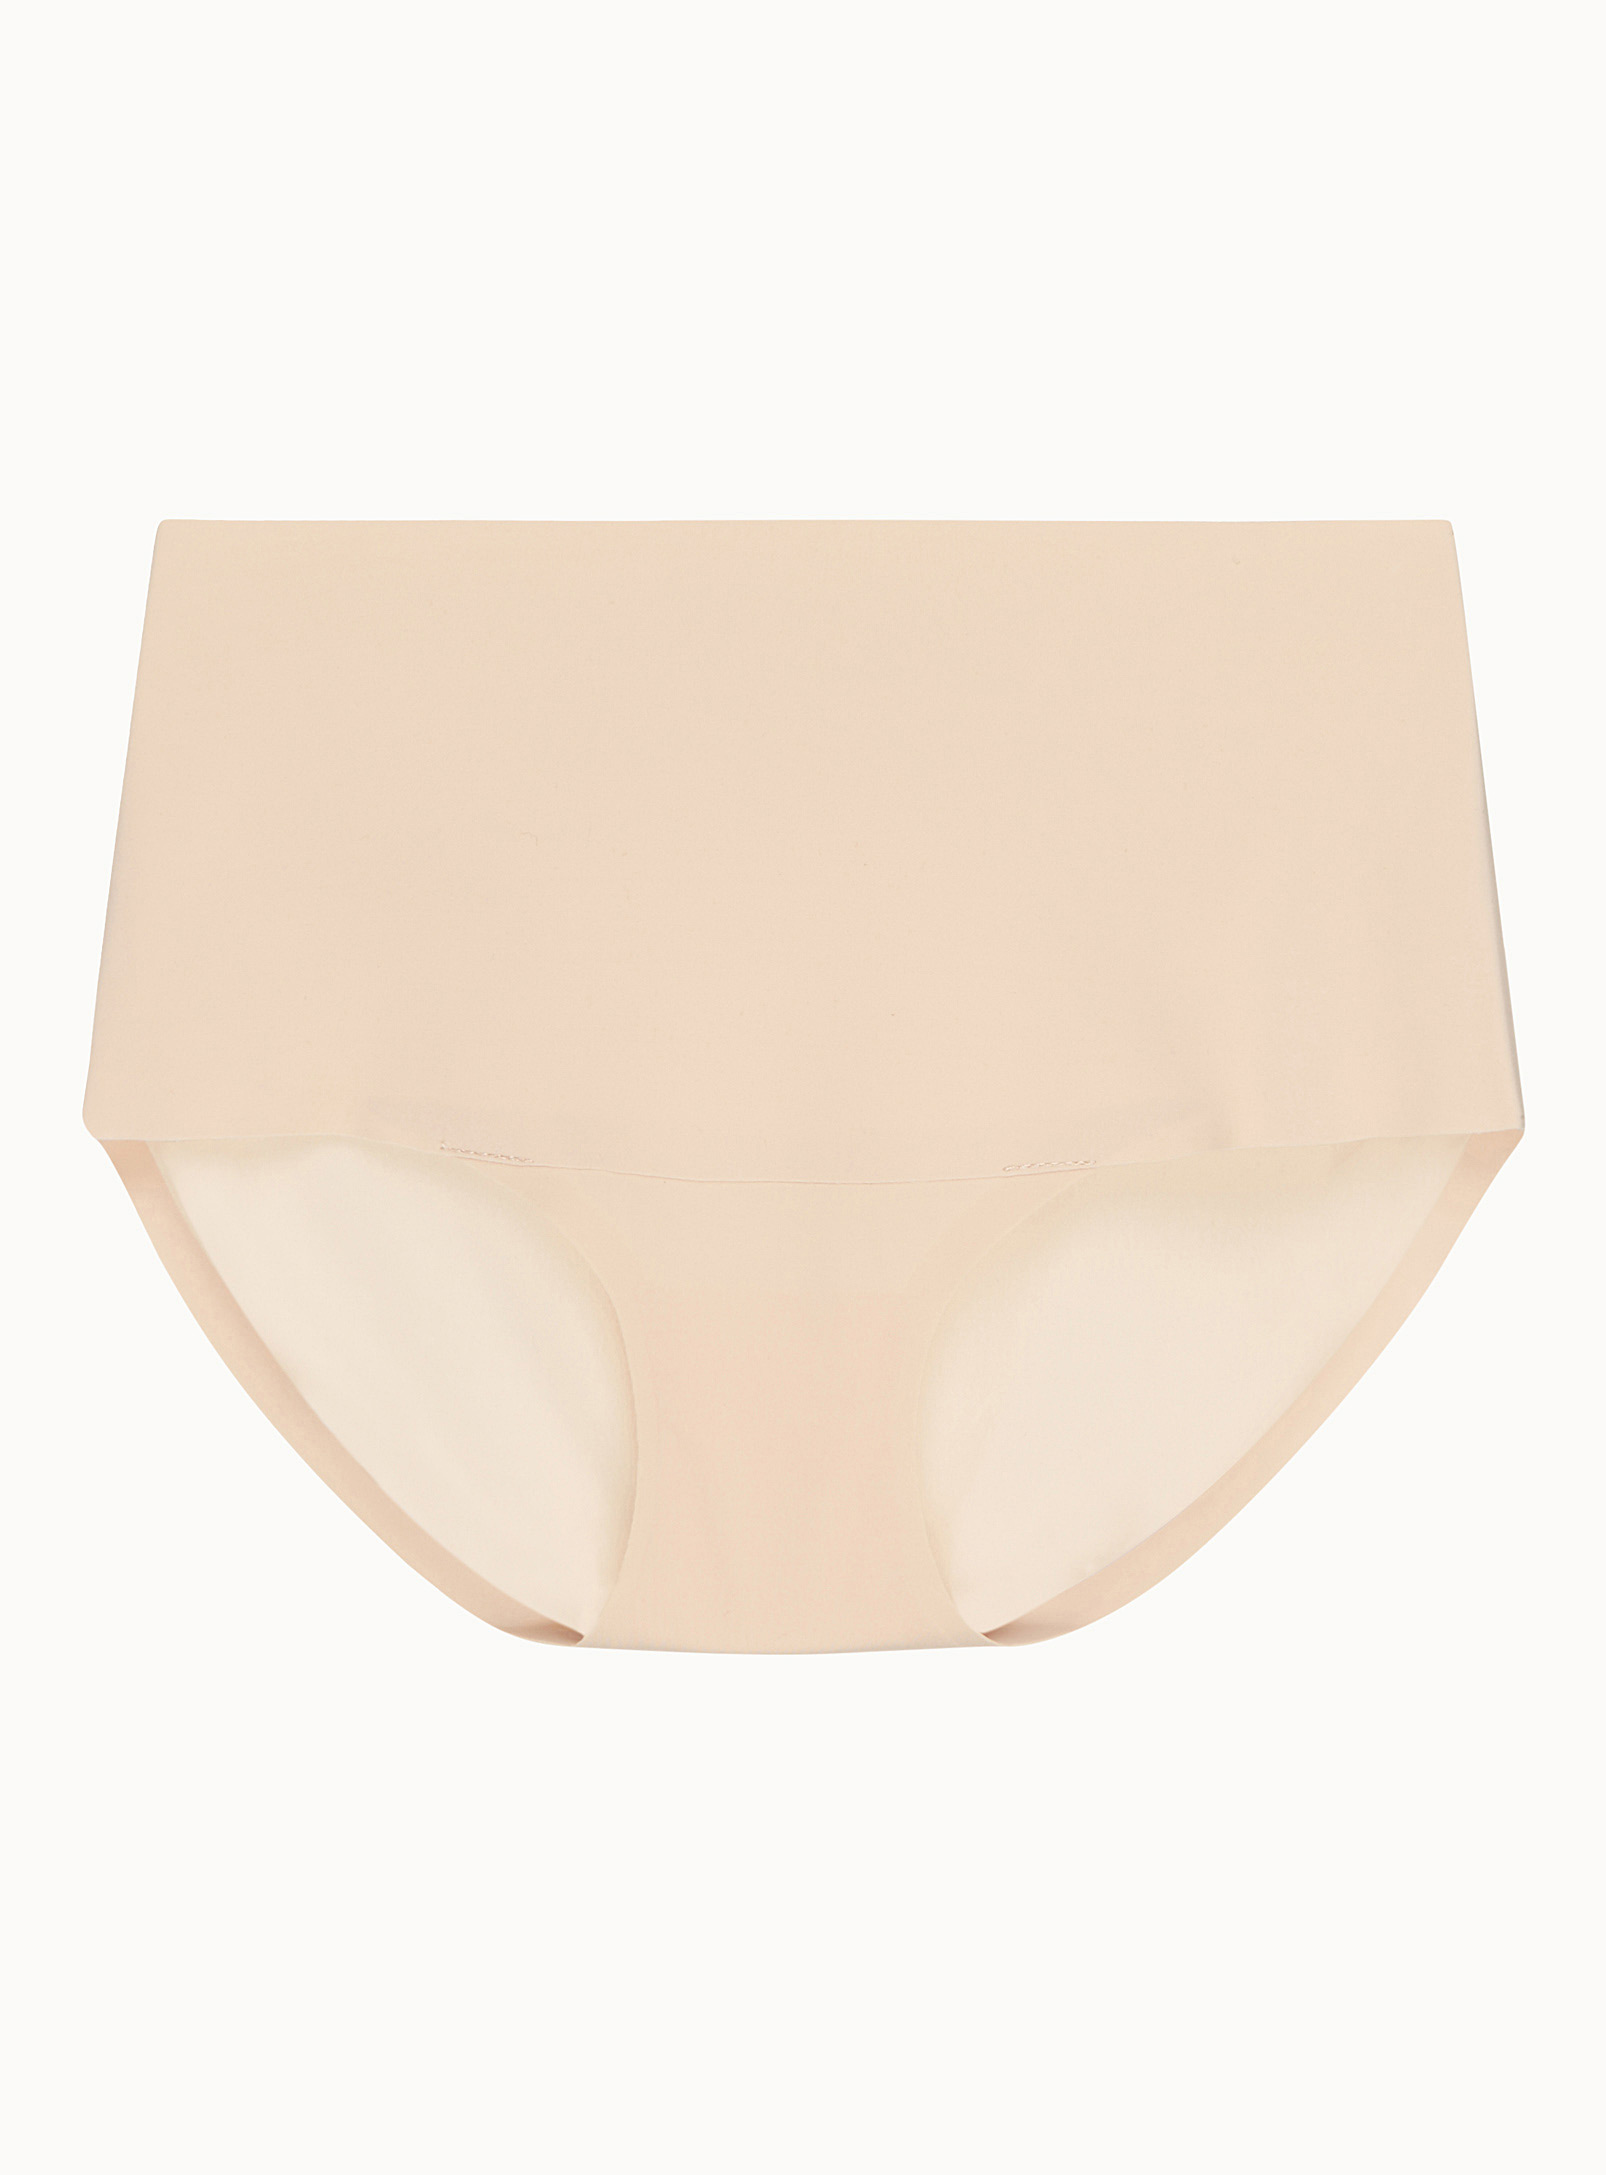 Spanx Undie-tectable Support Bikini Panty In Tan